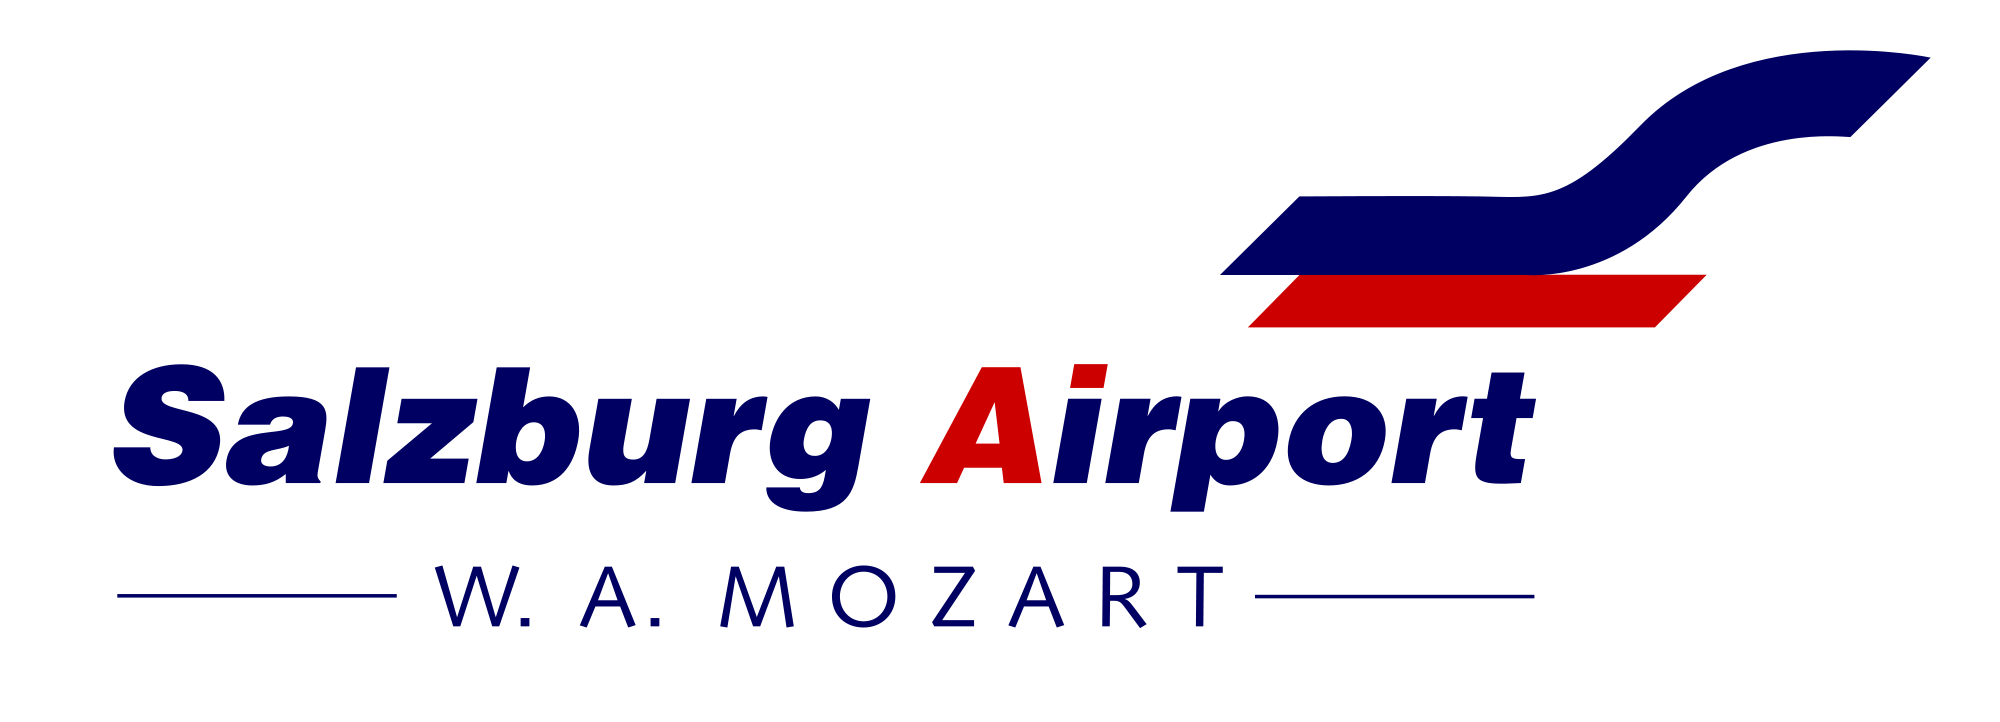 Salzburg Airport W.A. Mozart